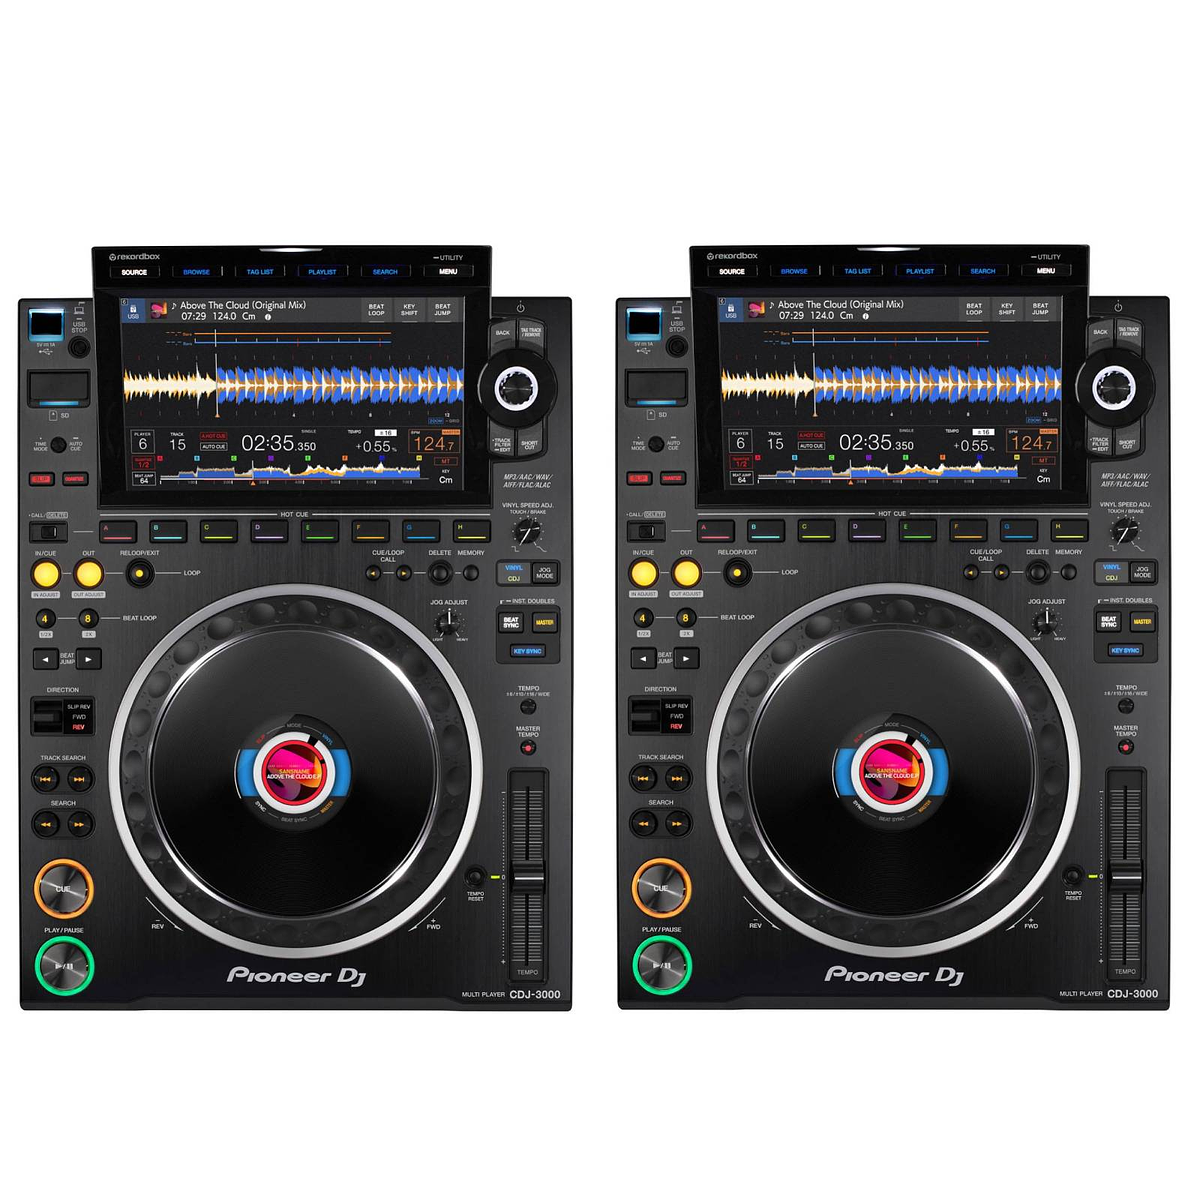 REPRODUCTOR PIONEER DJ CDJ-3000